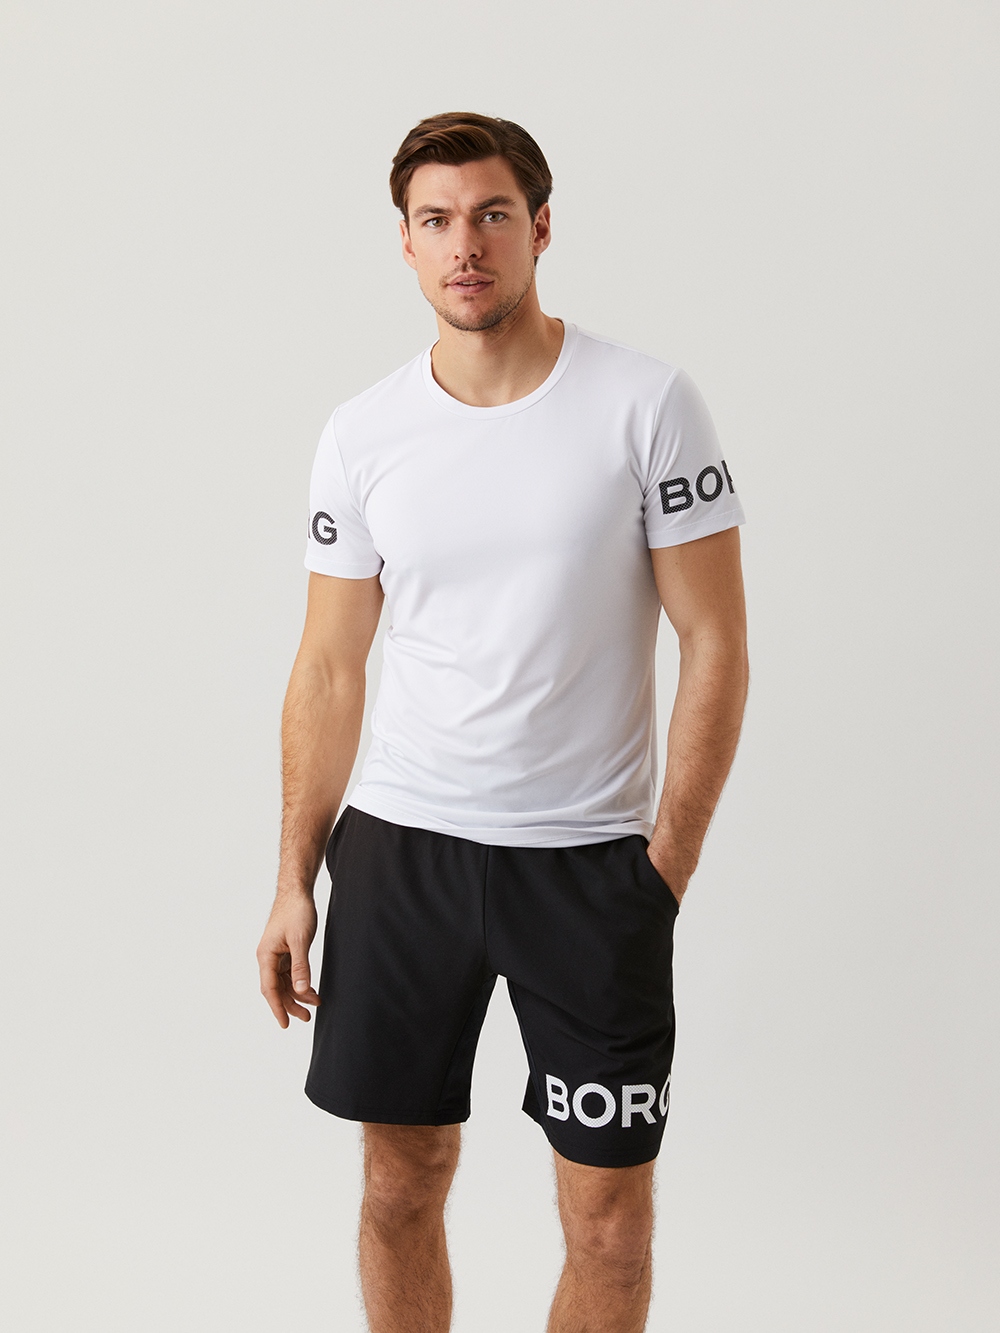 Björn Borg Short Sleeve Tee Shirt Sport Freizeit T-Shirt white 9999-1140_00071 